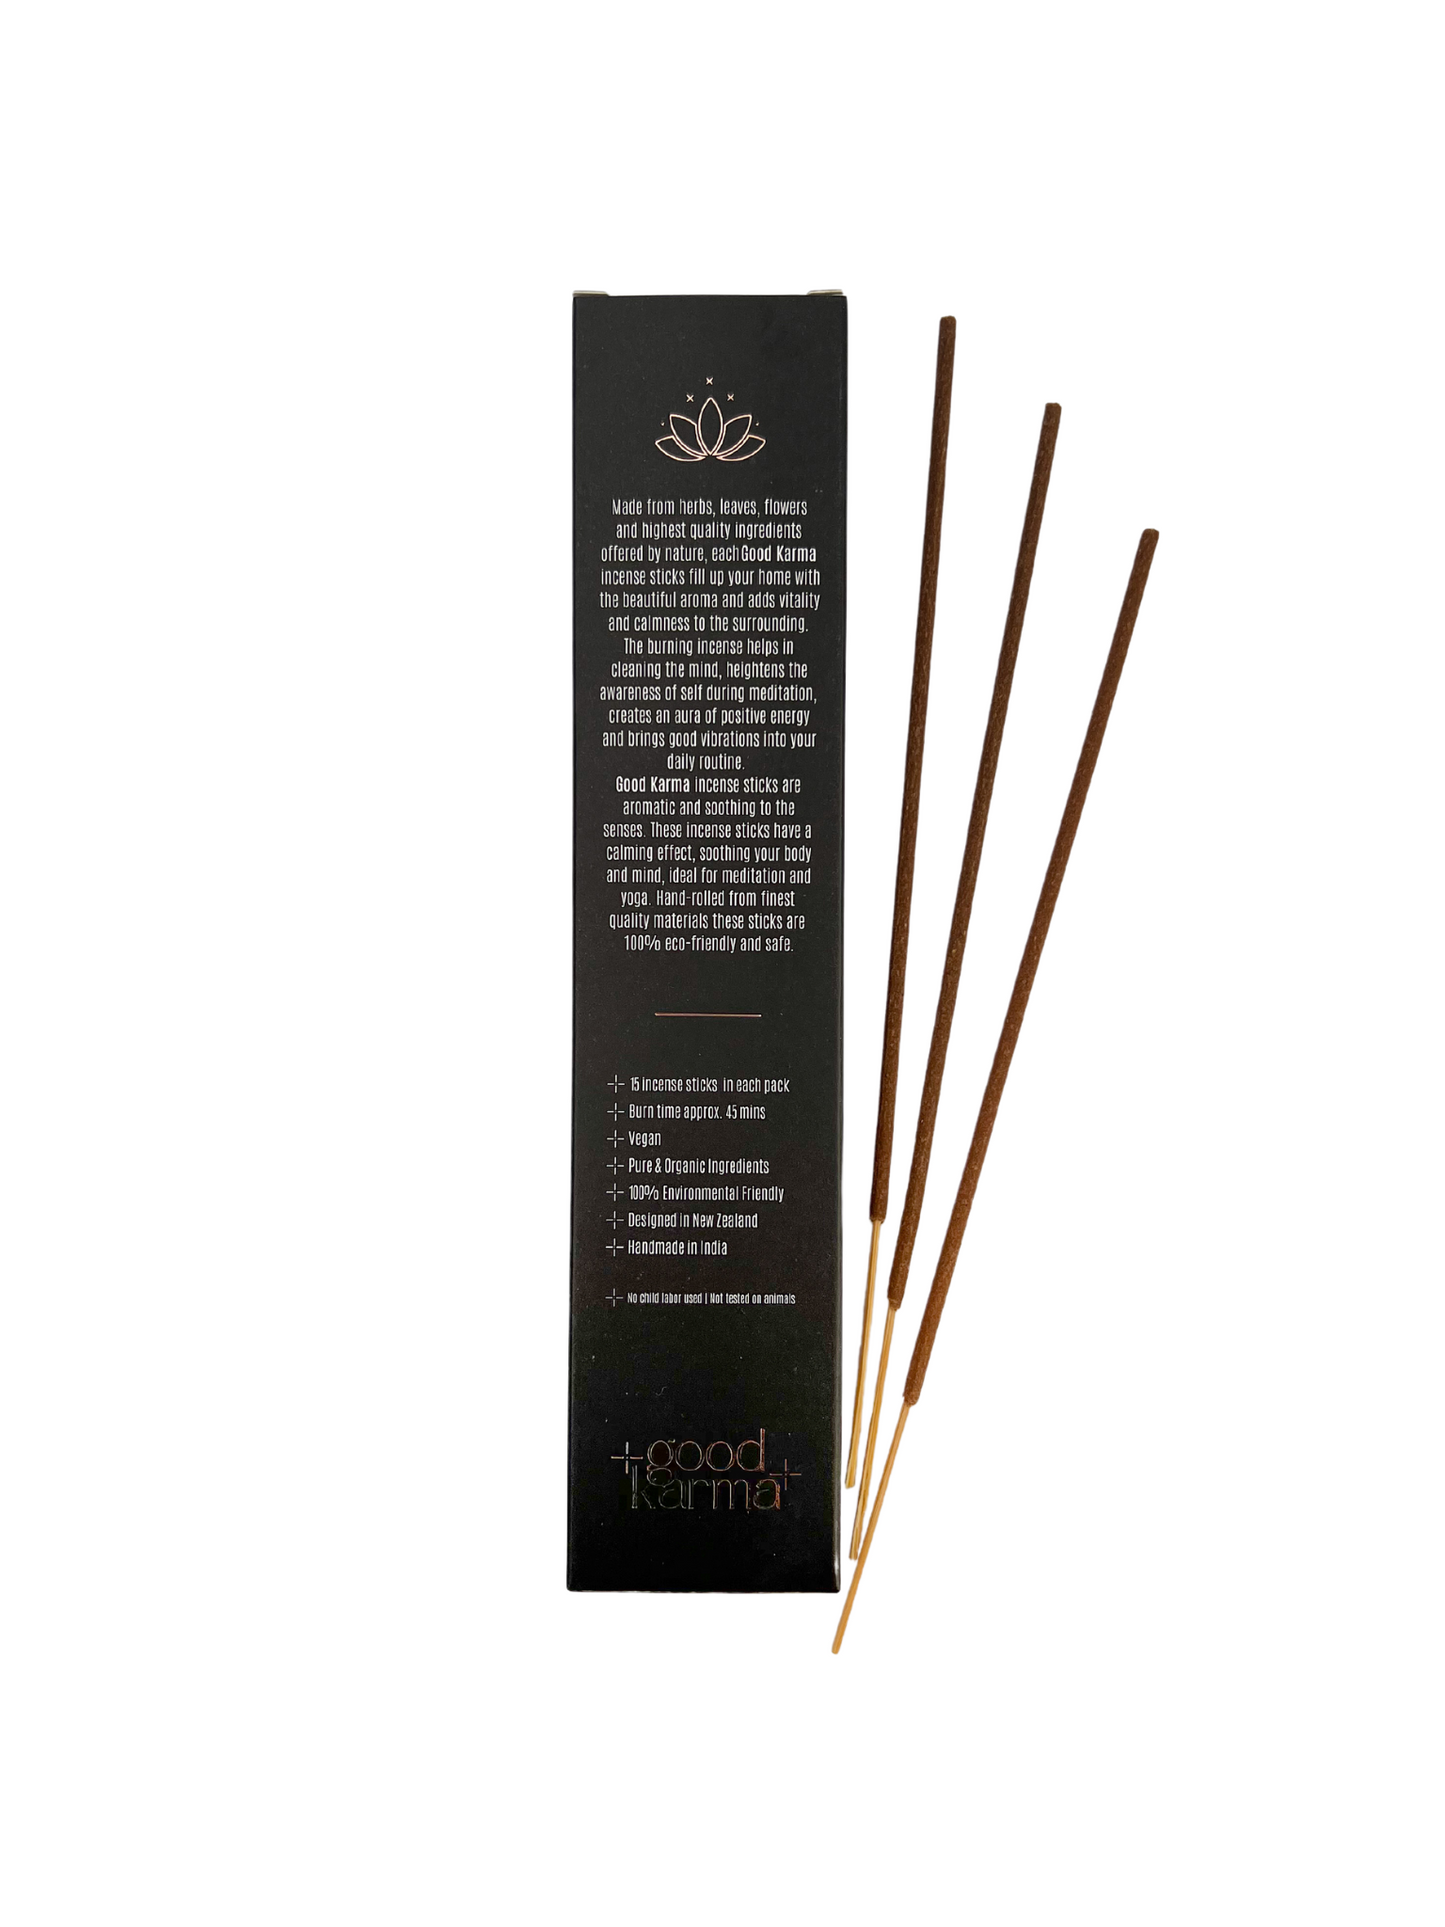 Good Karma Handmade Premium incense sticks pack back side of the box with 3 incense sticks